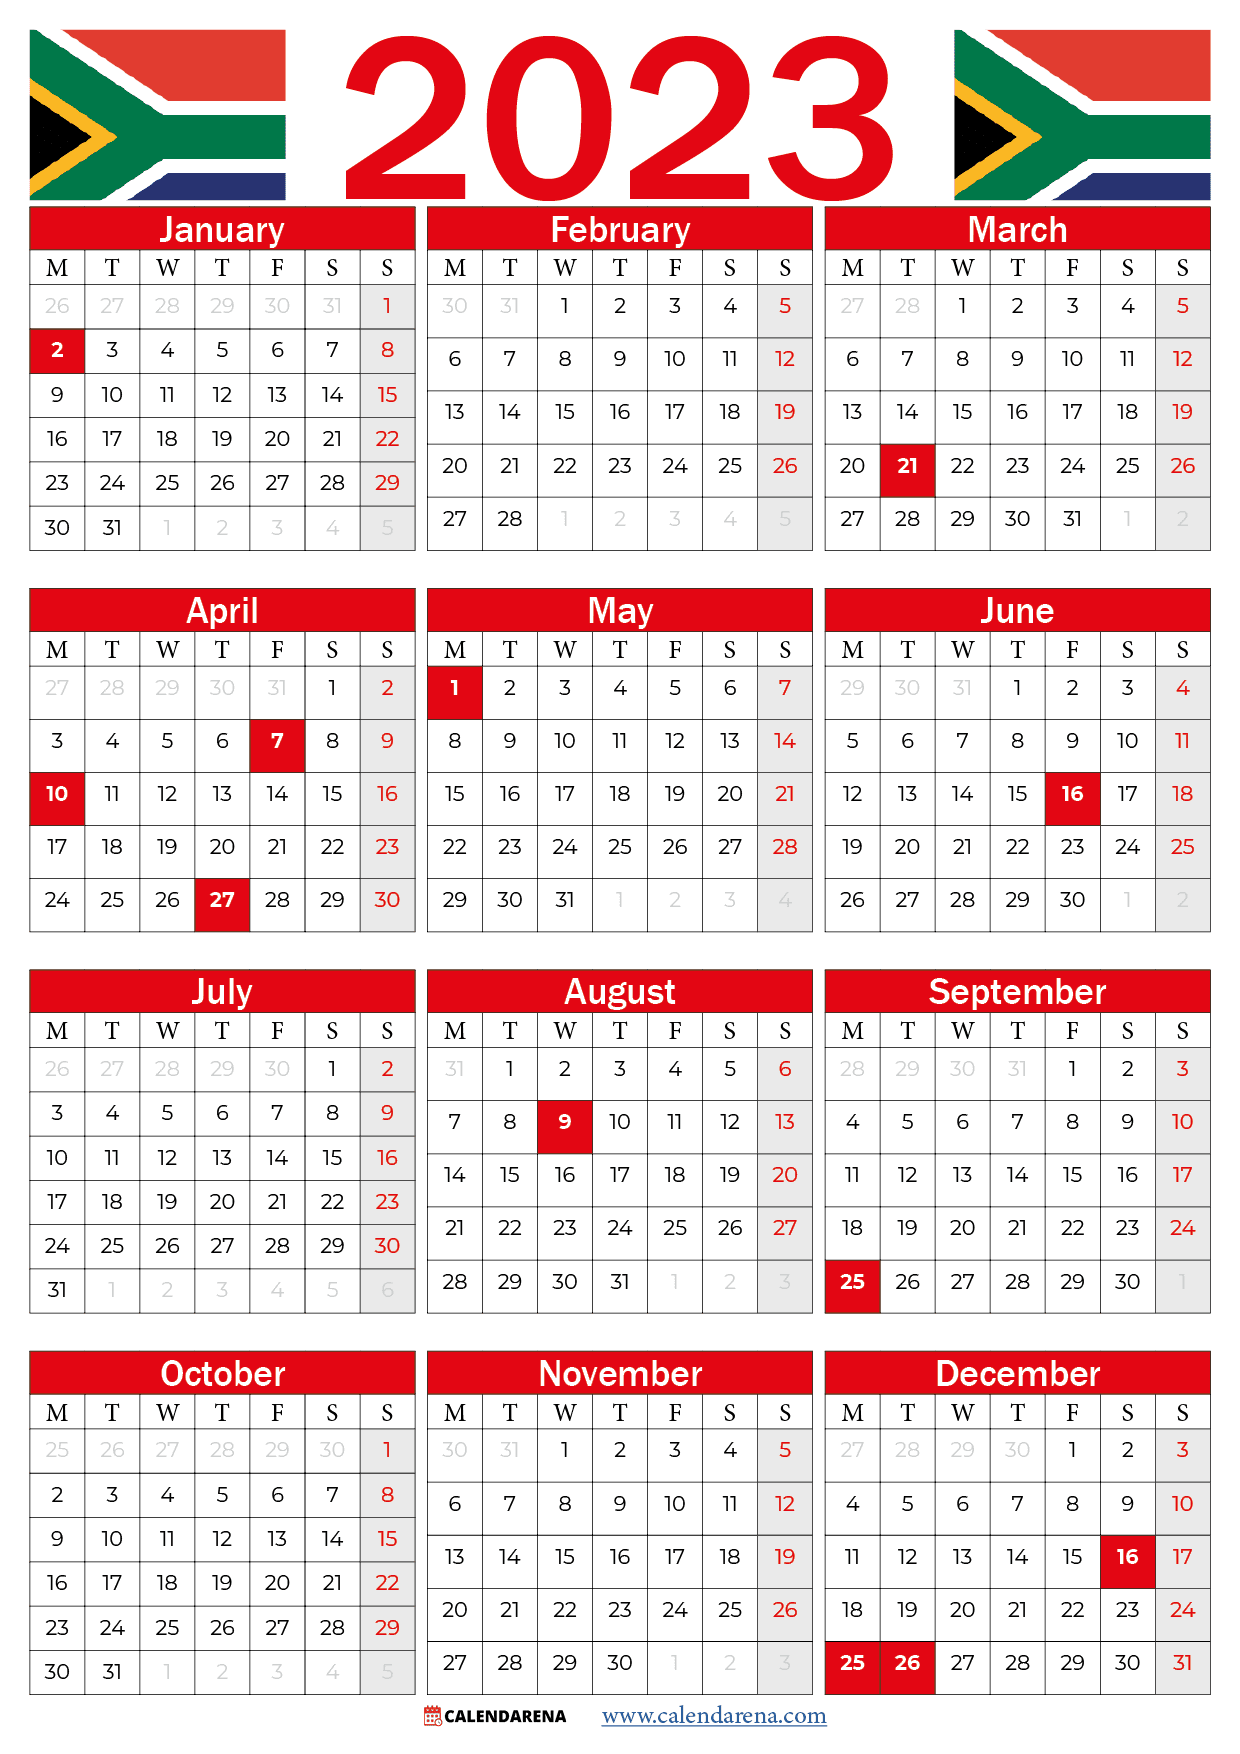 free printable calendar 2023 south africa - 2023 printable calendar ...